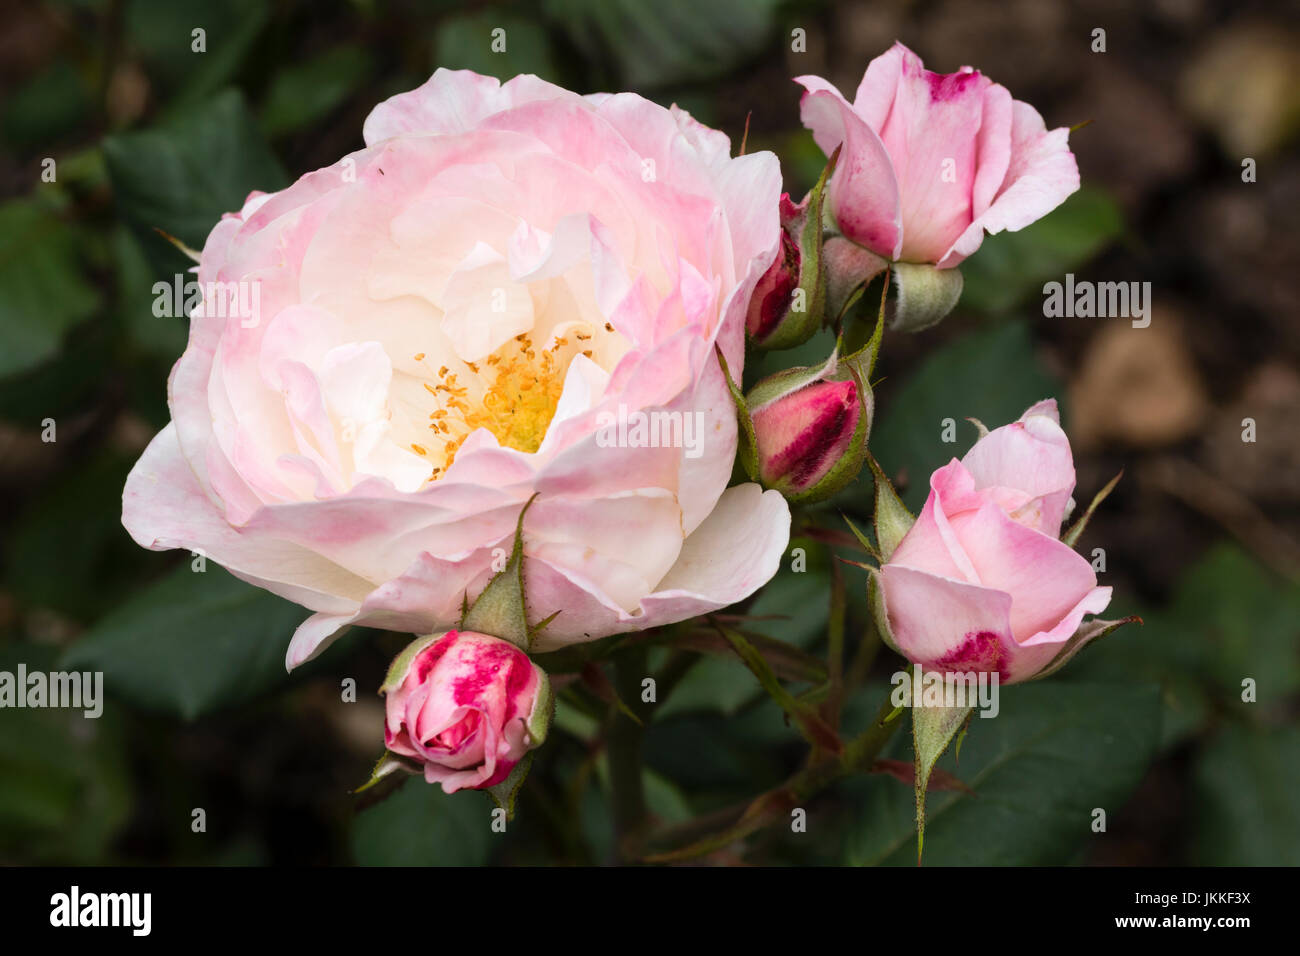 Buds and semi double  flower of the fragrant pink floribunda rose, Rosa 'English Miss' Stock Photo